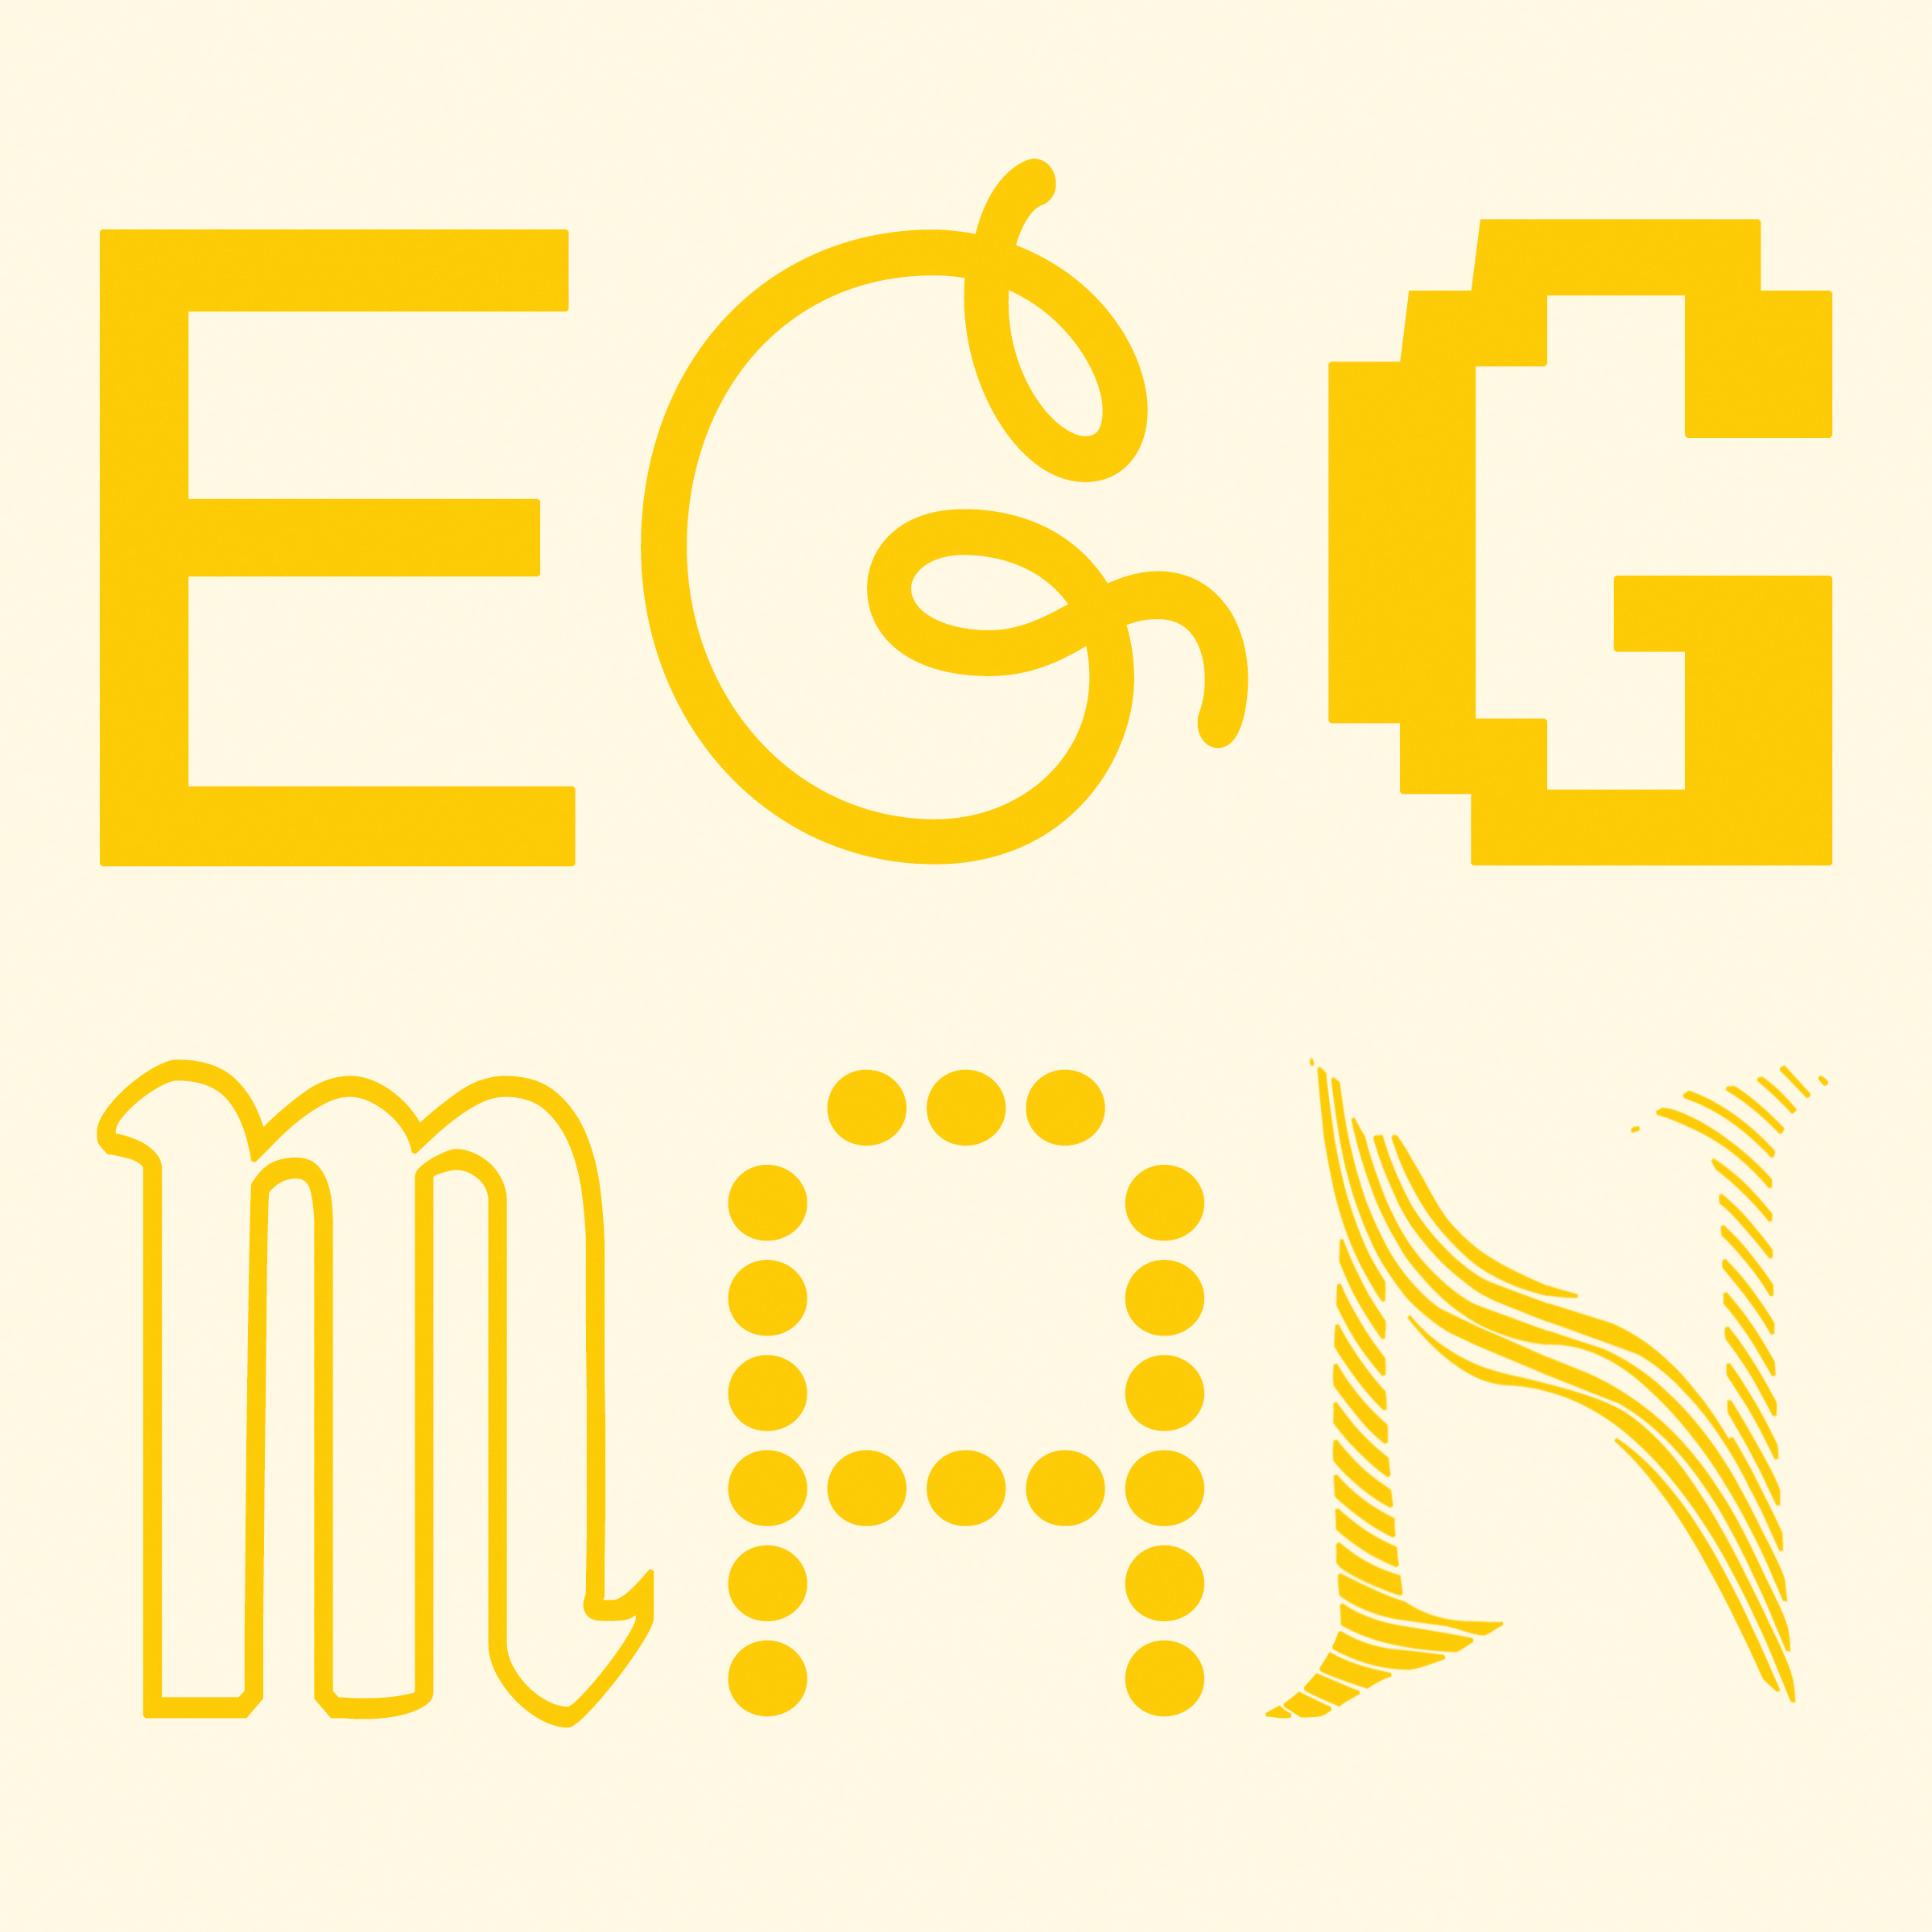 Ty Segall — Eggman cover artwork